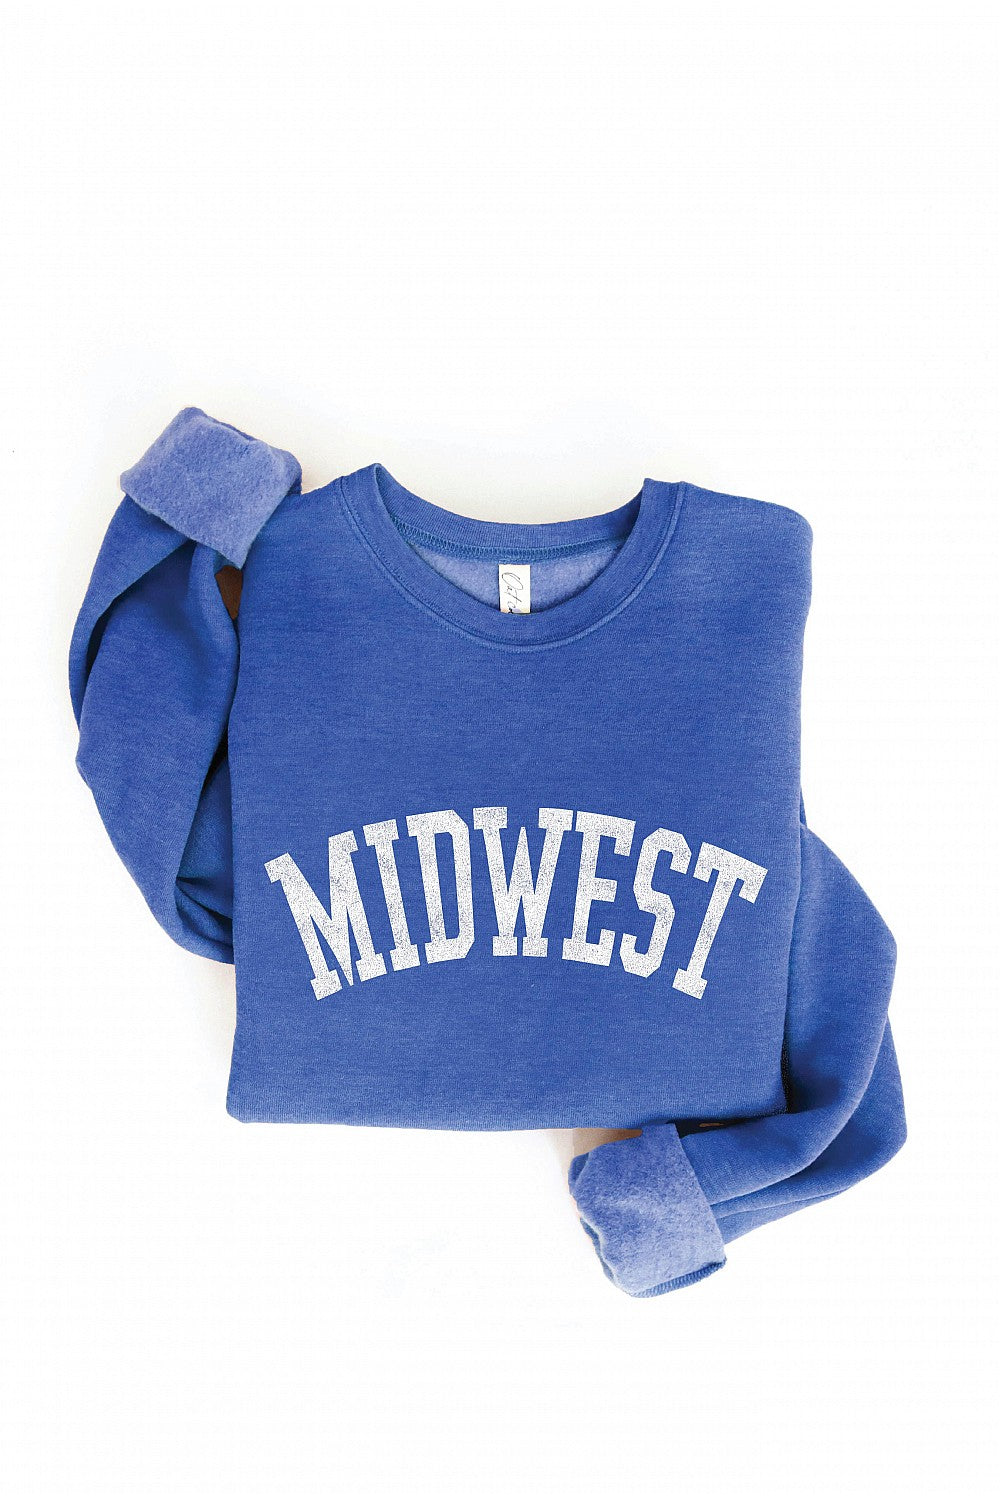 PREORDER Midwest Graphic Fleece Sweatshirt - Royal Blue